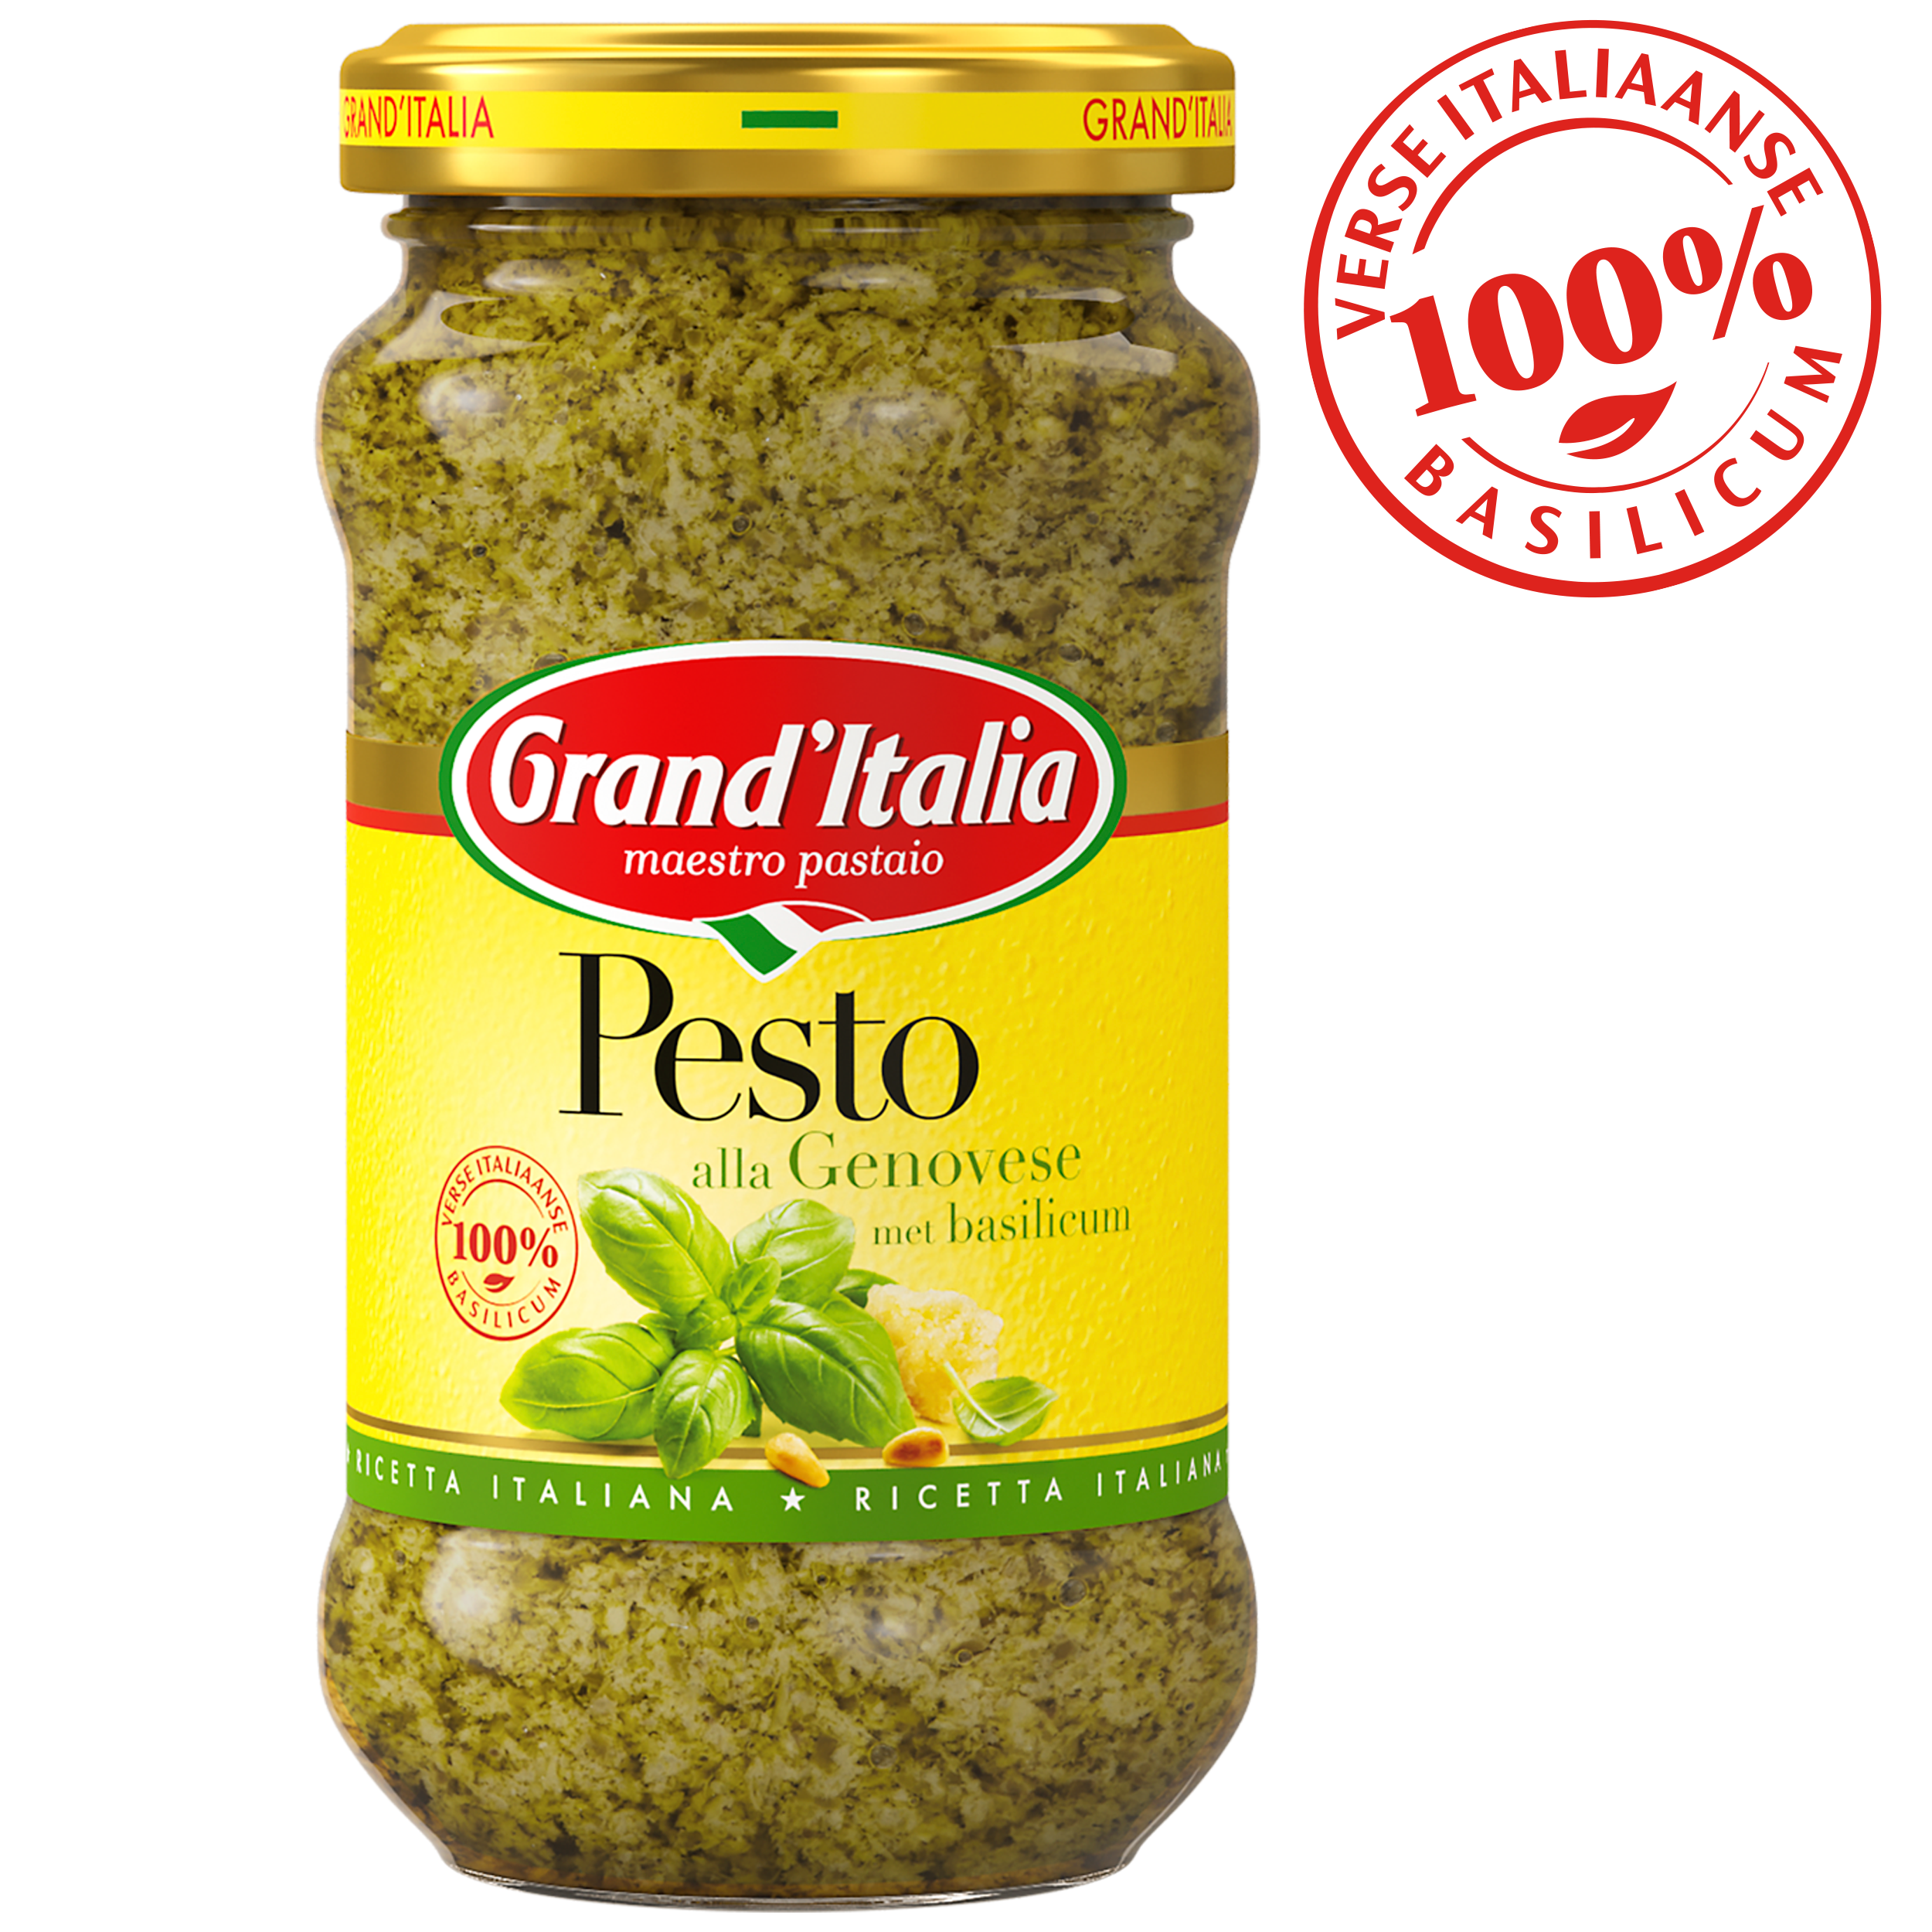 Pesto alla Genovese 185g Grand'Italia - claim